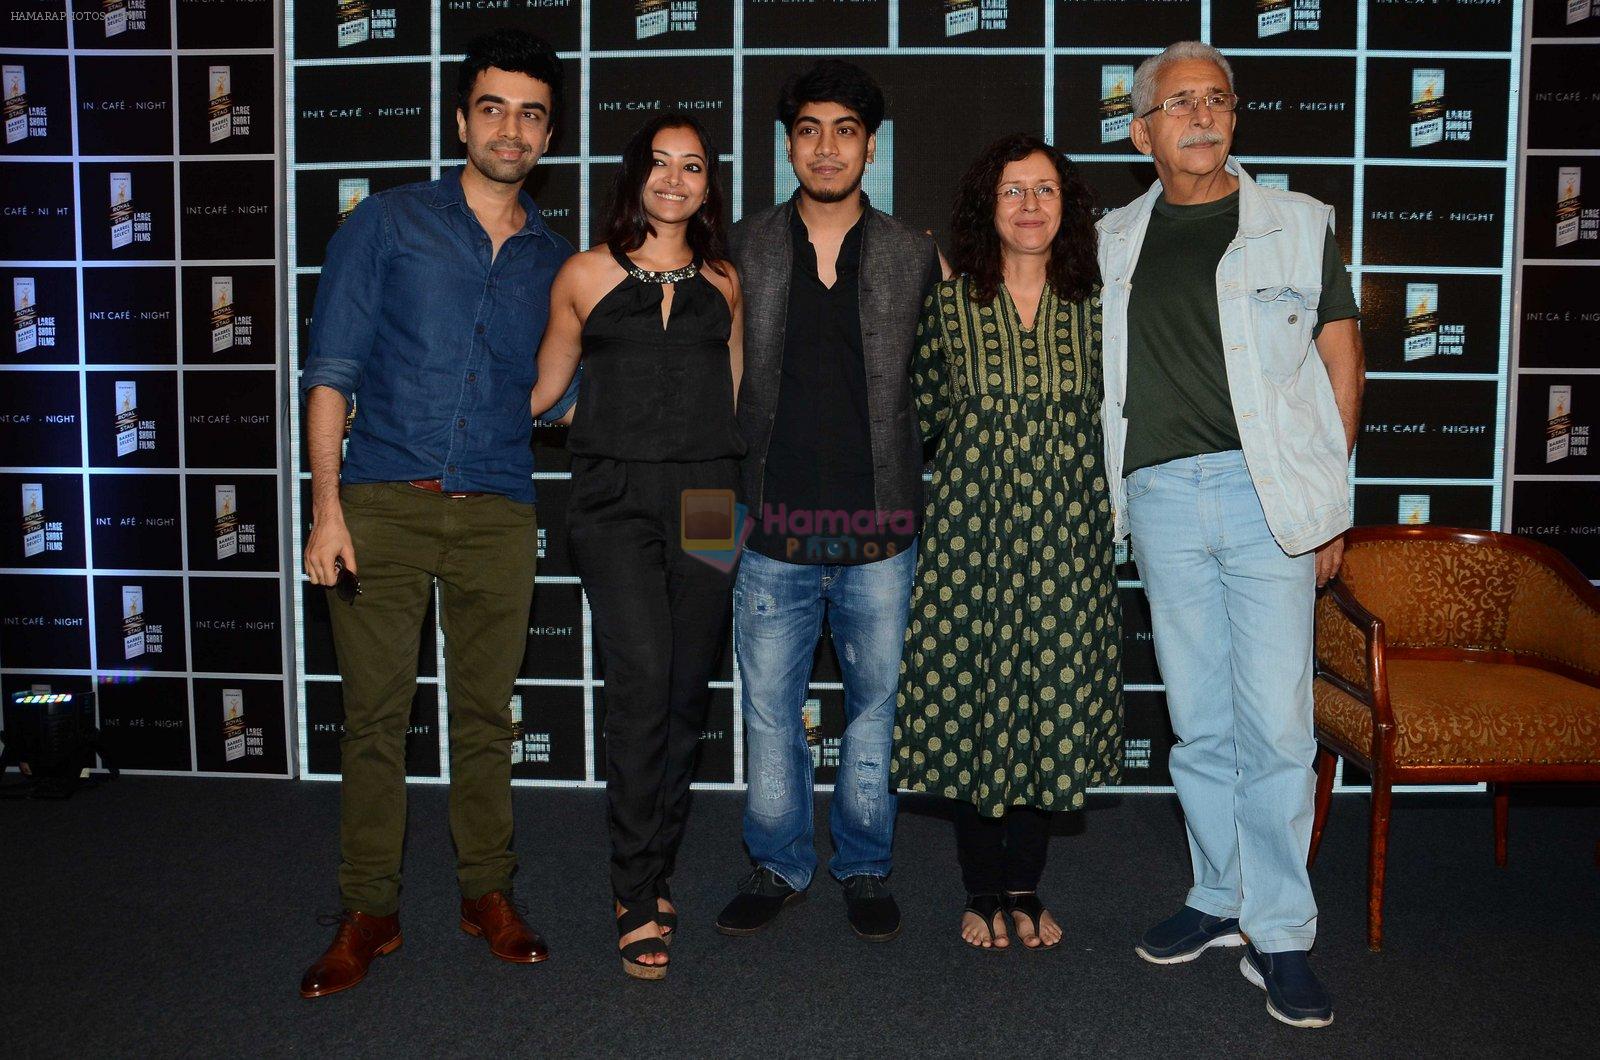 Shweta Prasad, Shernaz Patel, Naseeruddin Shah at Media interaction & screening of short film Interior Cafe - Night in Mumbai on 18th July 2016